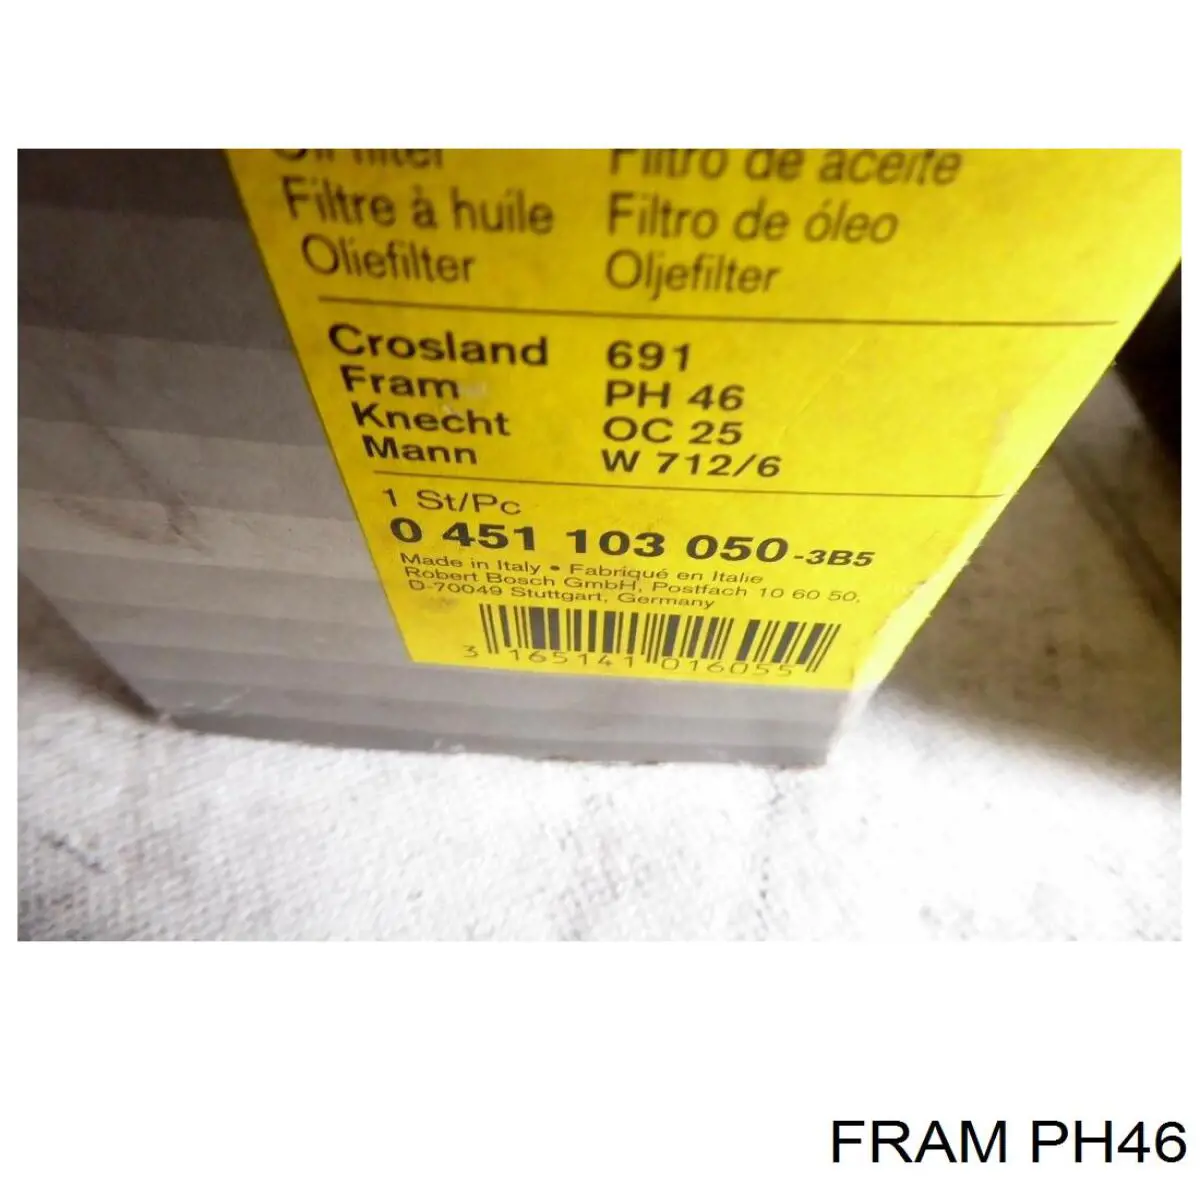 PH46 Fram filtro de aceite